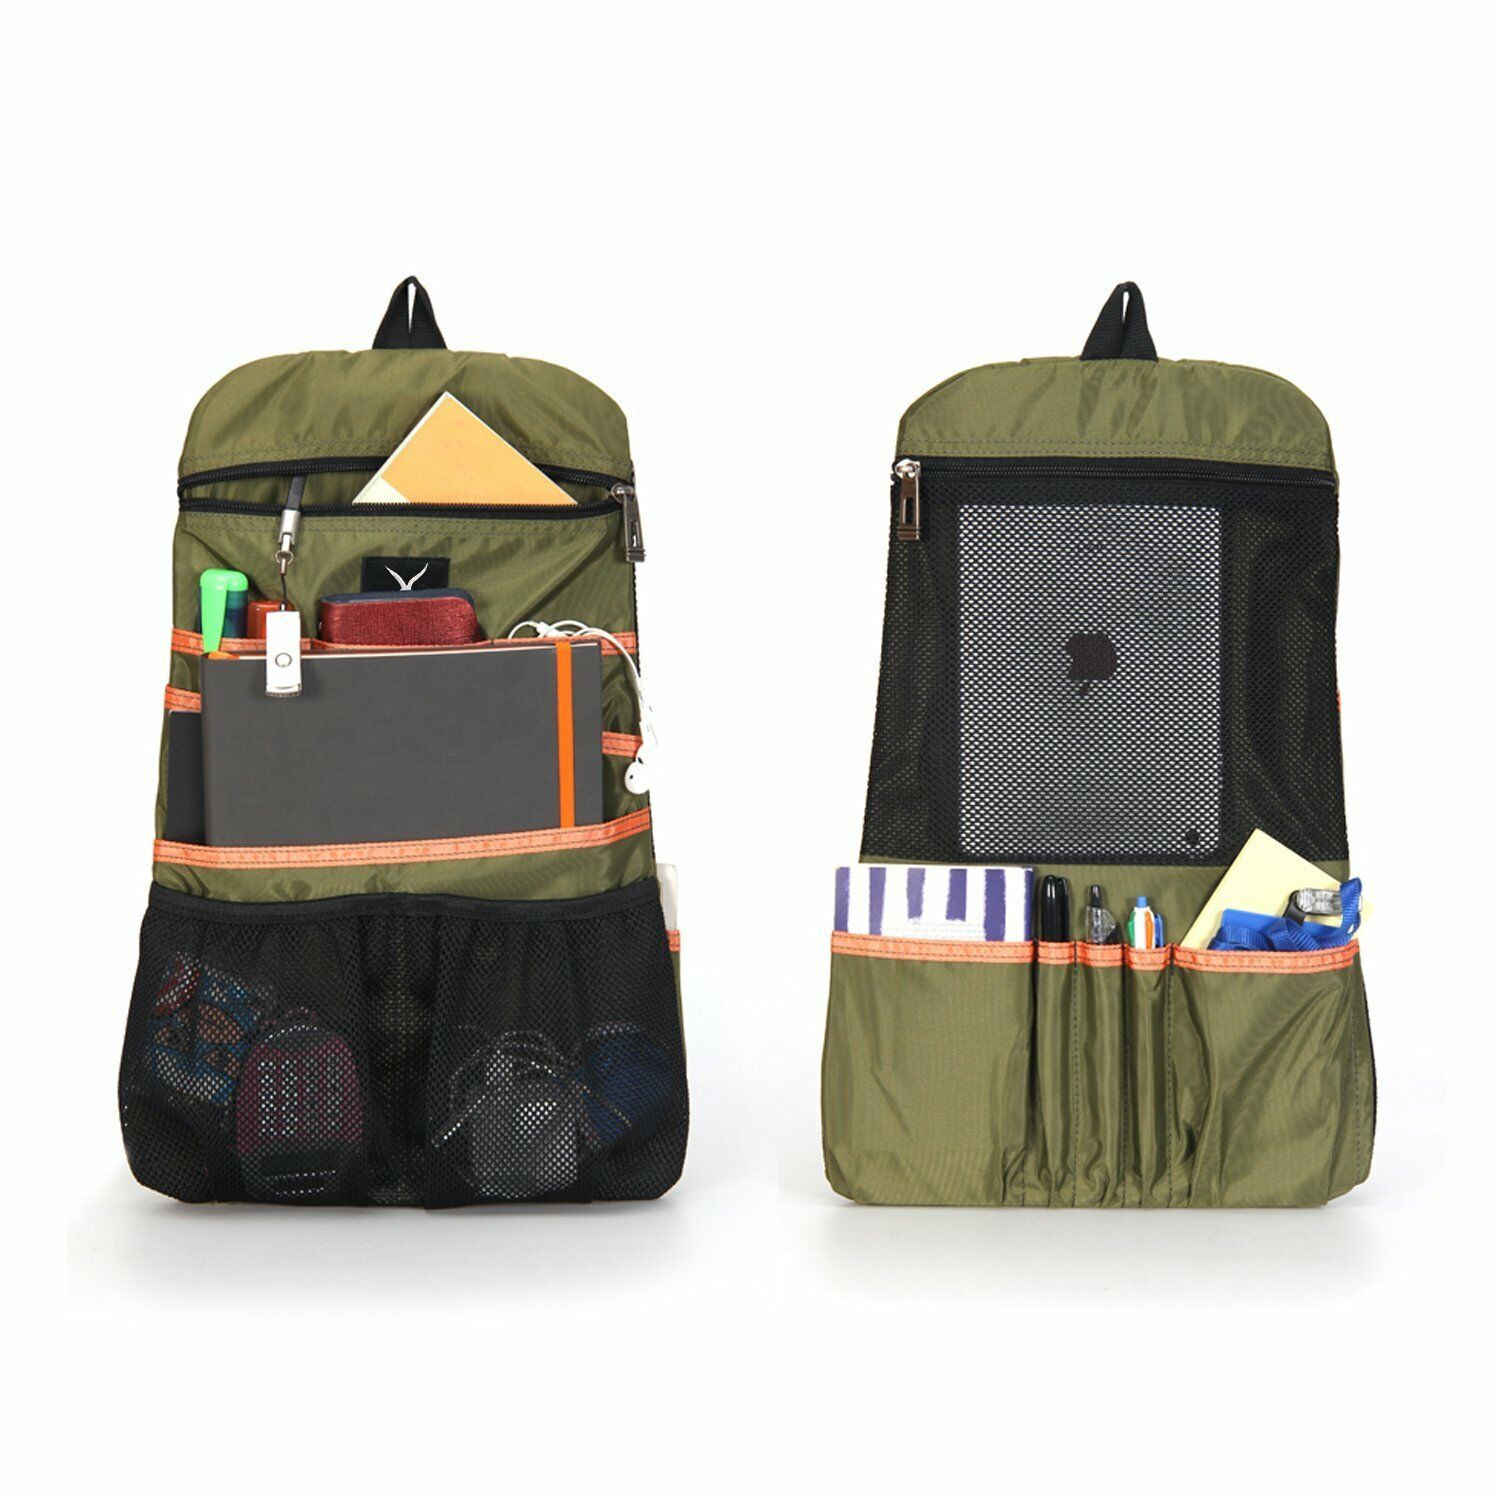 Backpack organizer Insert Elegant Hynes Eagle Backpack Insert organizer Travel Gear Rucksack